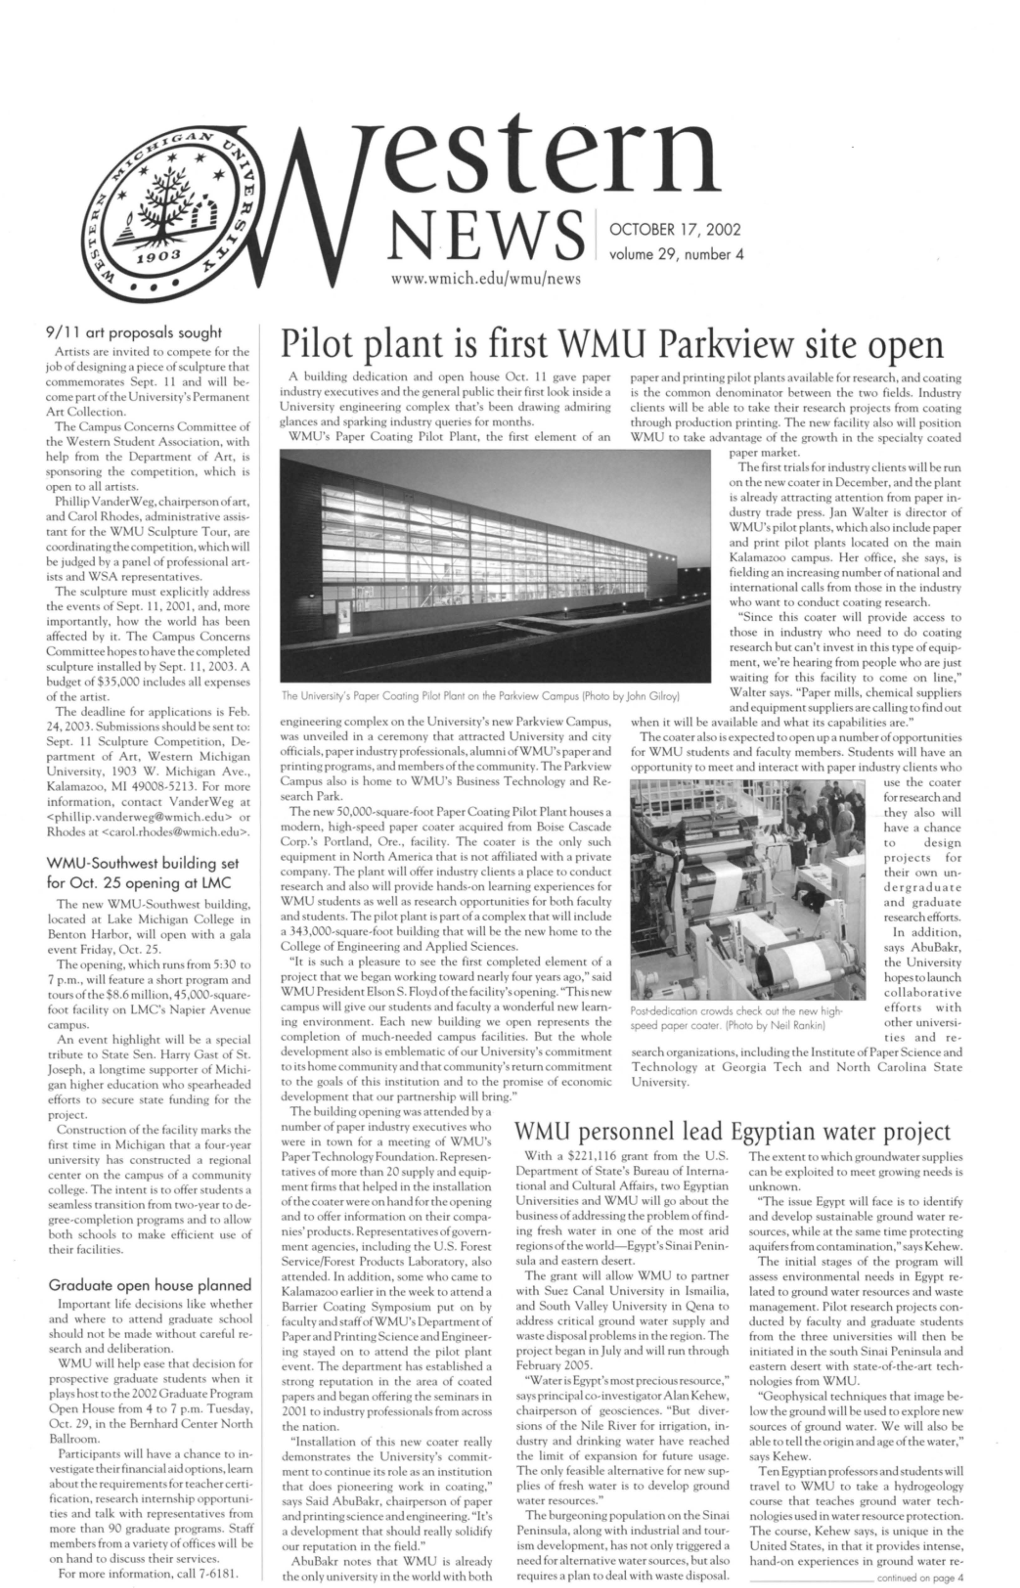 Pilot Plant Is First WMU Parkview Site Open Job of De-.Sij;:Nin~ a Piece L1f Ulptun: Thar Comm ·Mnrnt · ·Pt